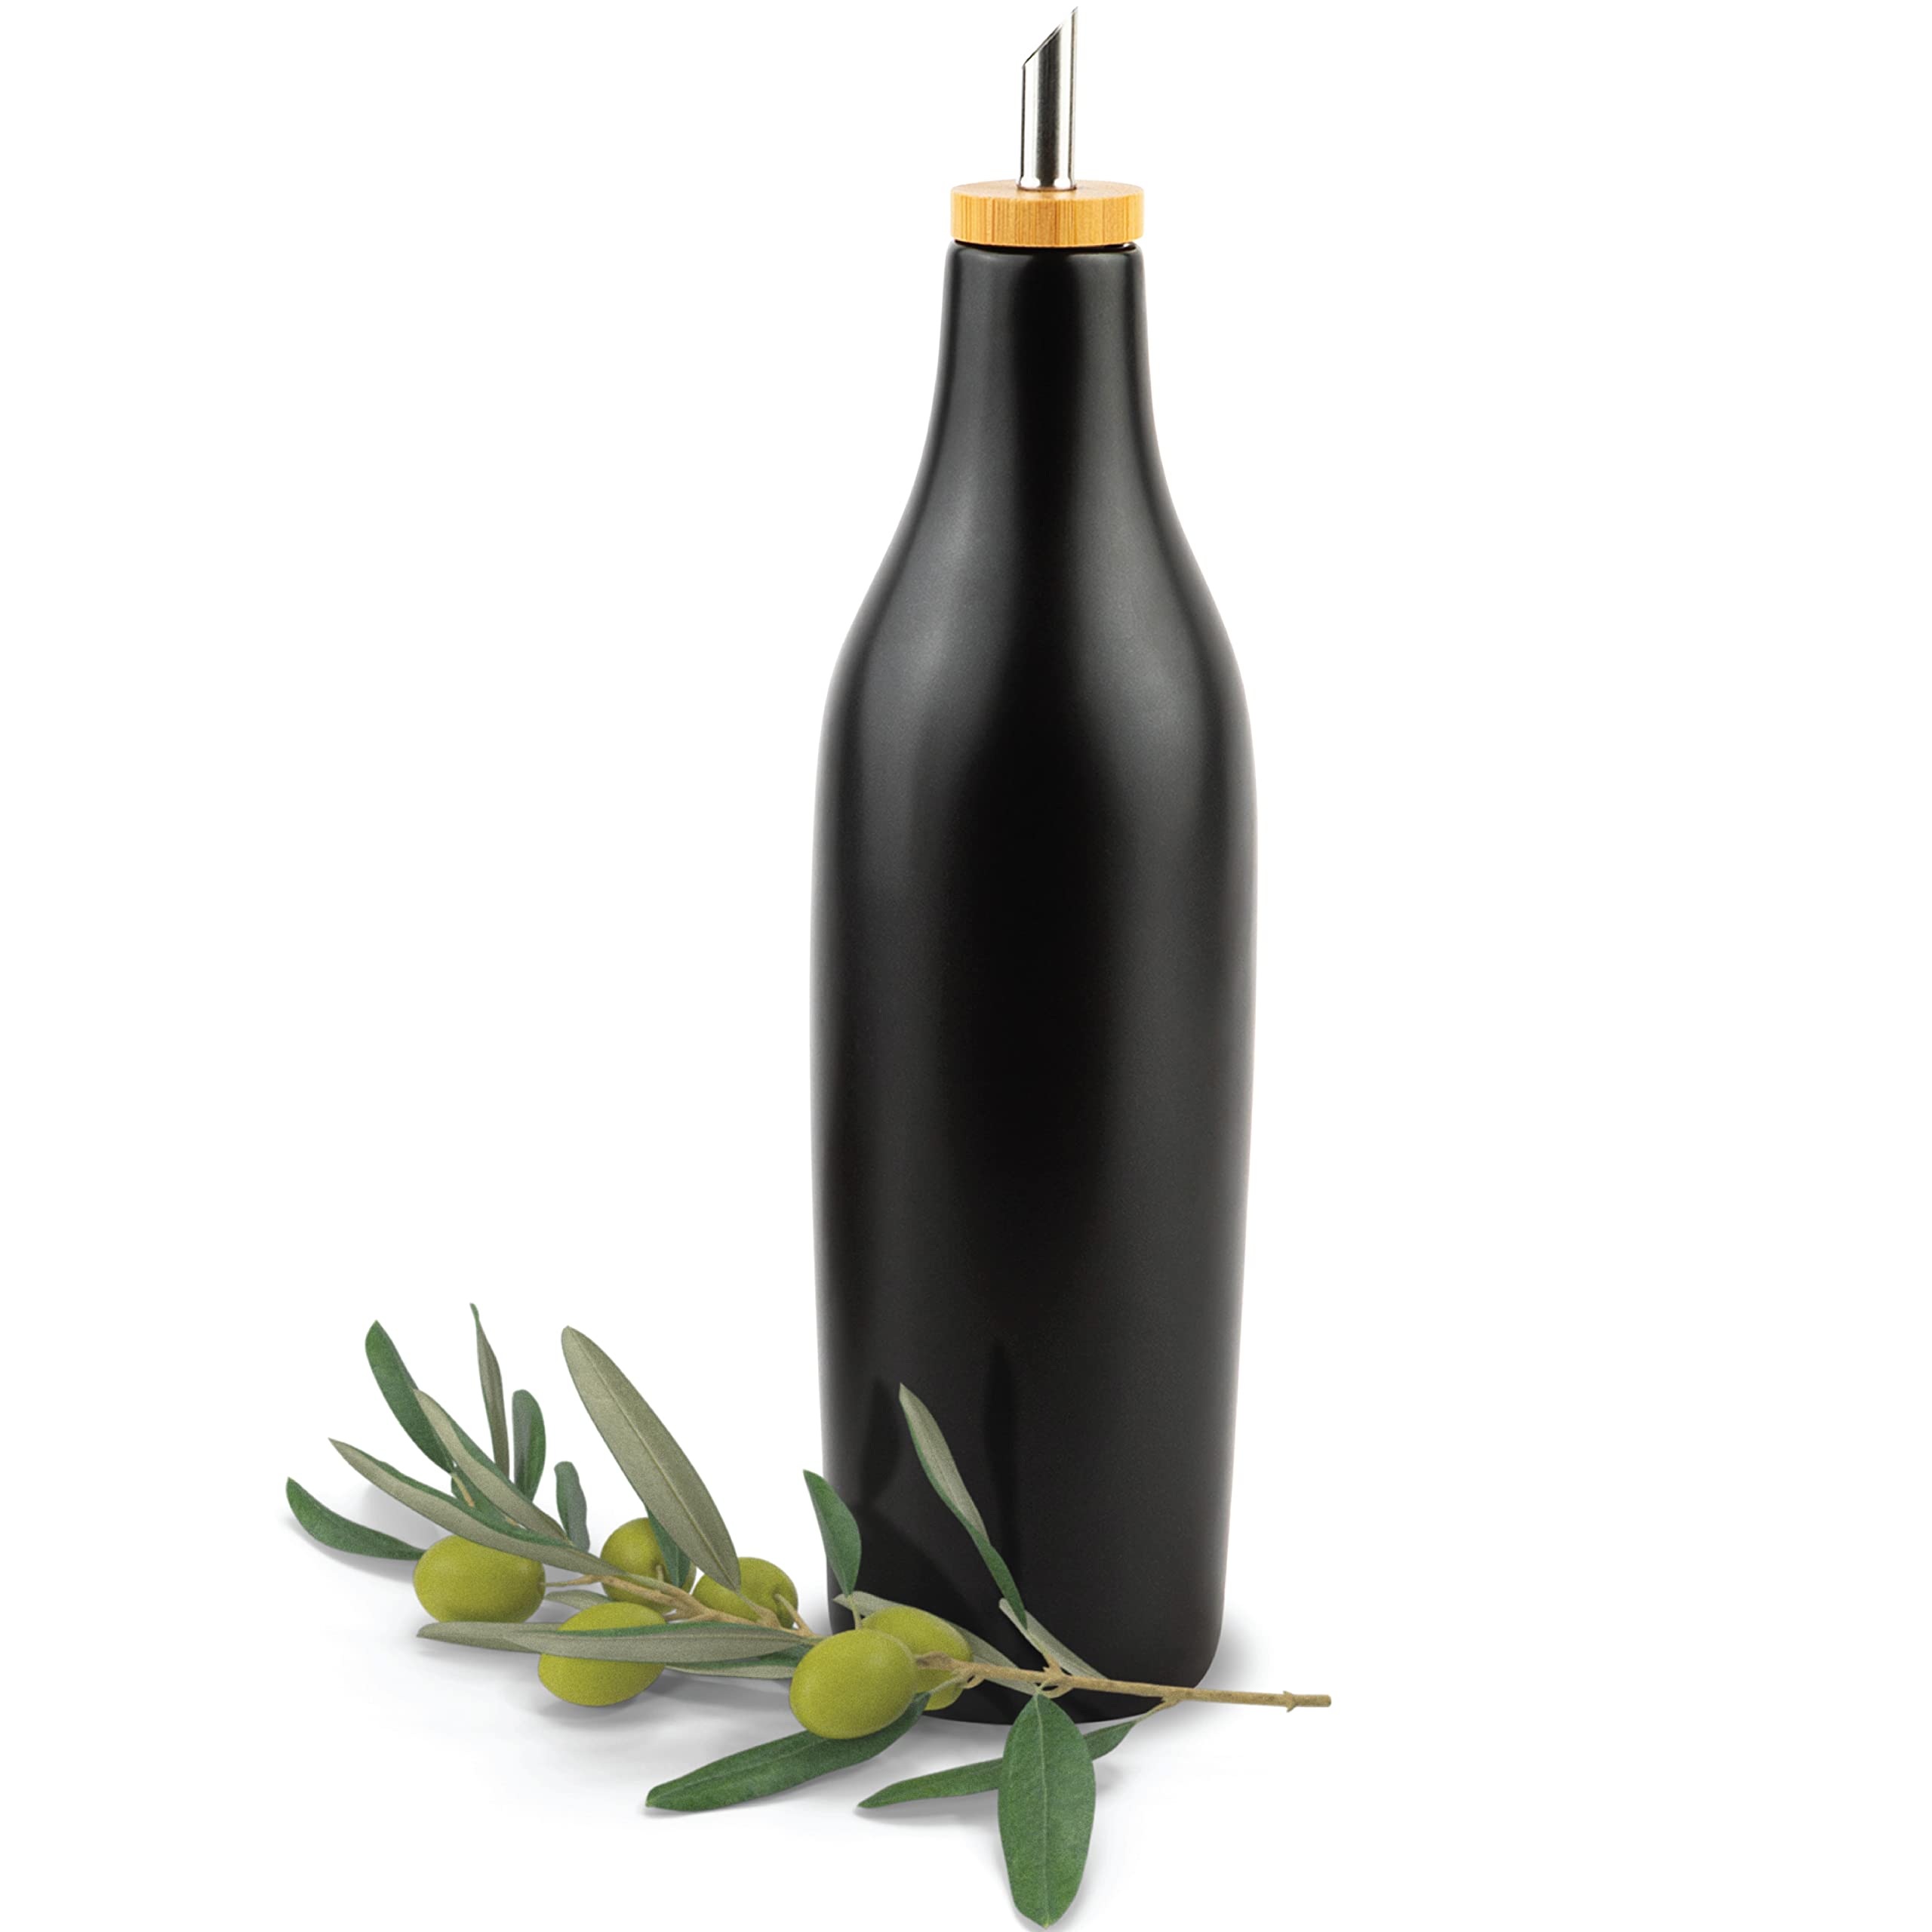 kitchentoolz Ceramic Olive Oil Dispenser Bottle, 16 Oz Container for Kitchen Counter  - Like New